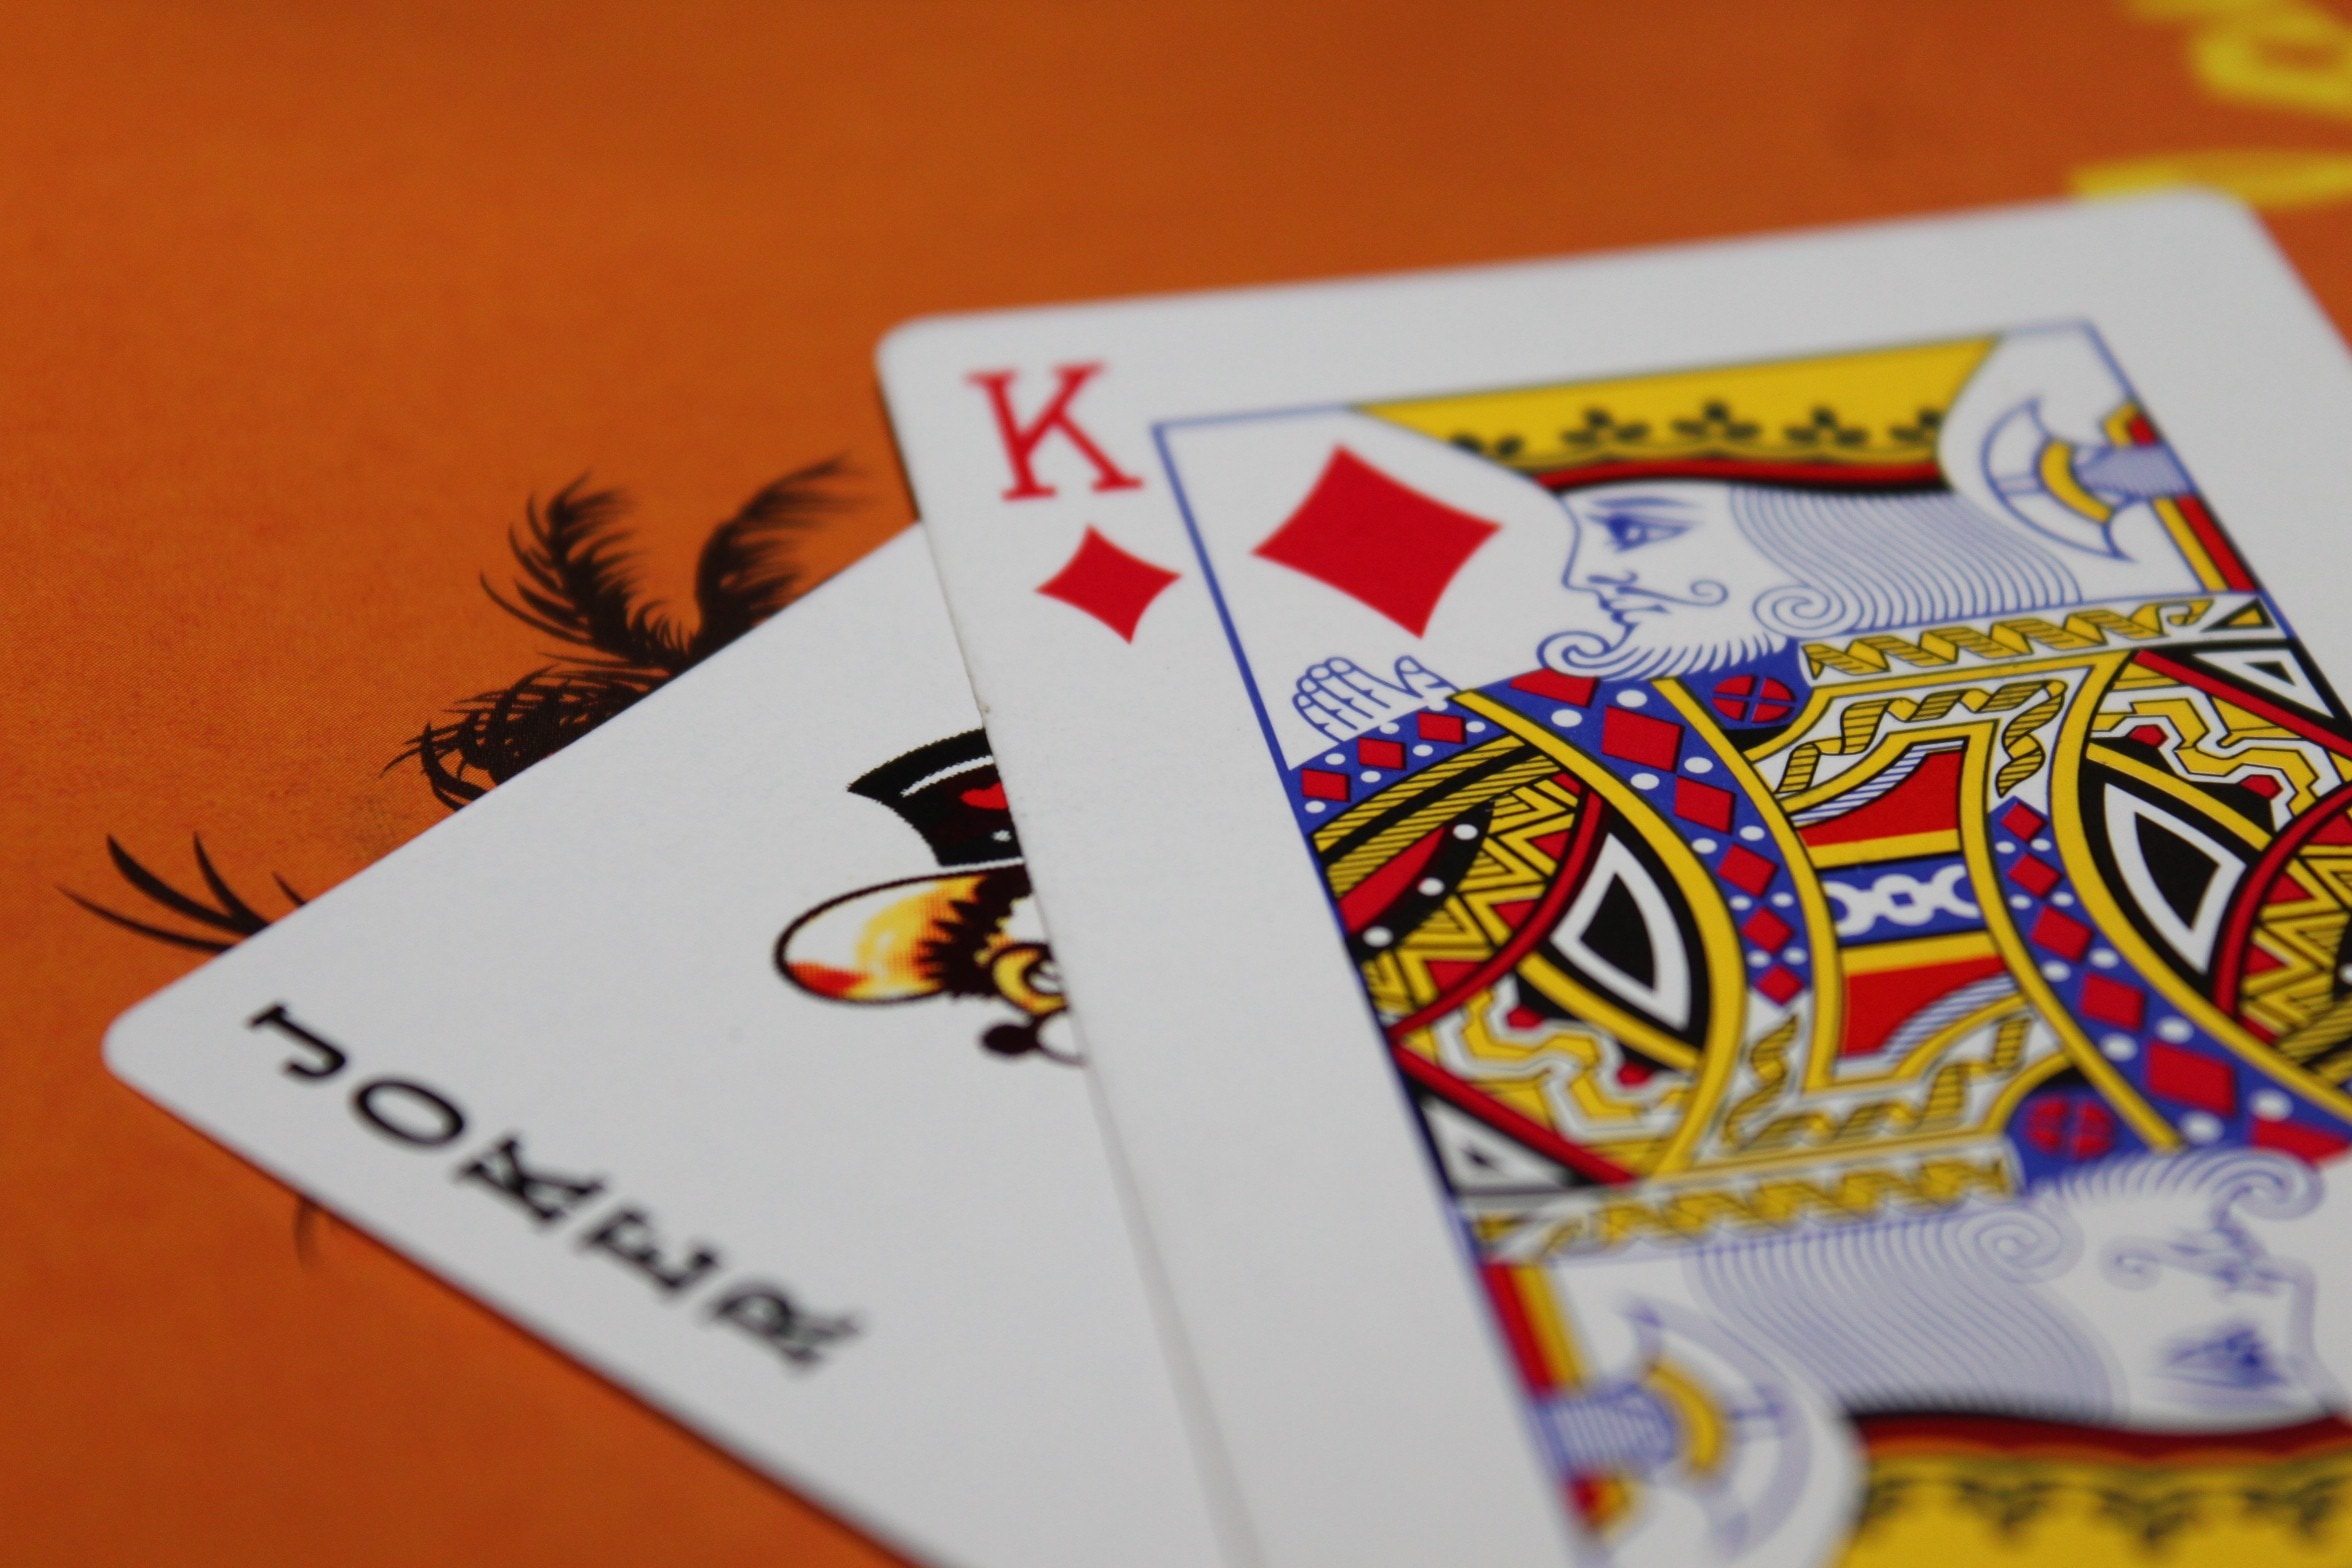 joker and king of diamond playing card on orange surface